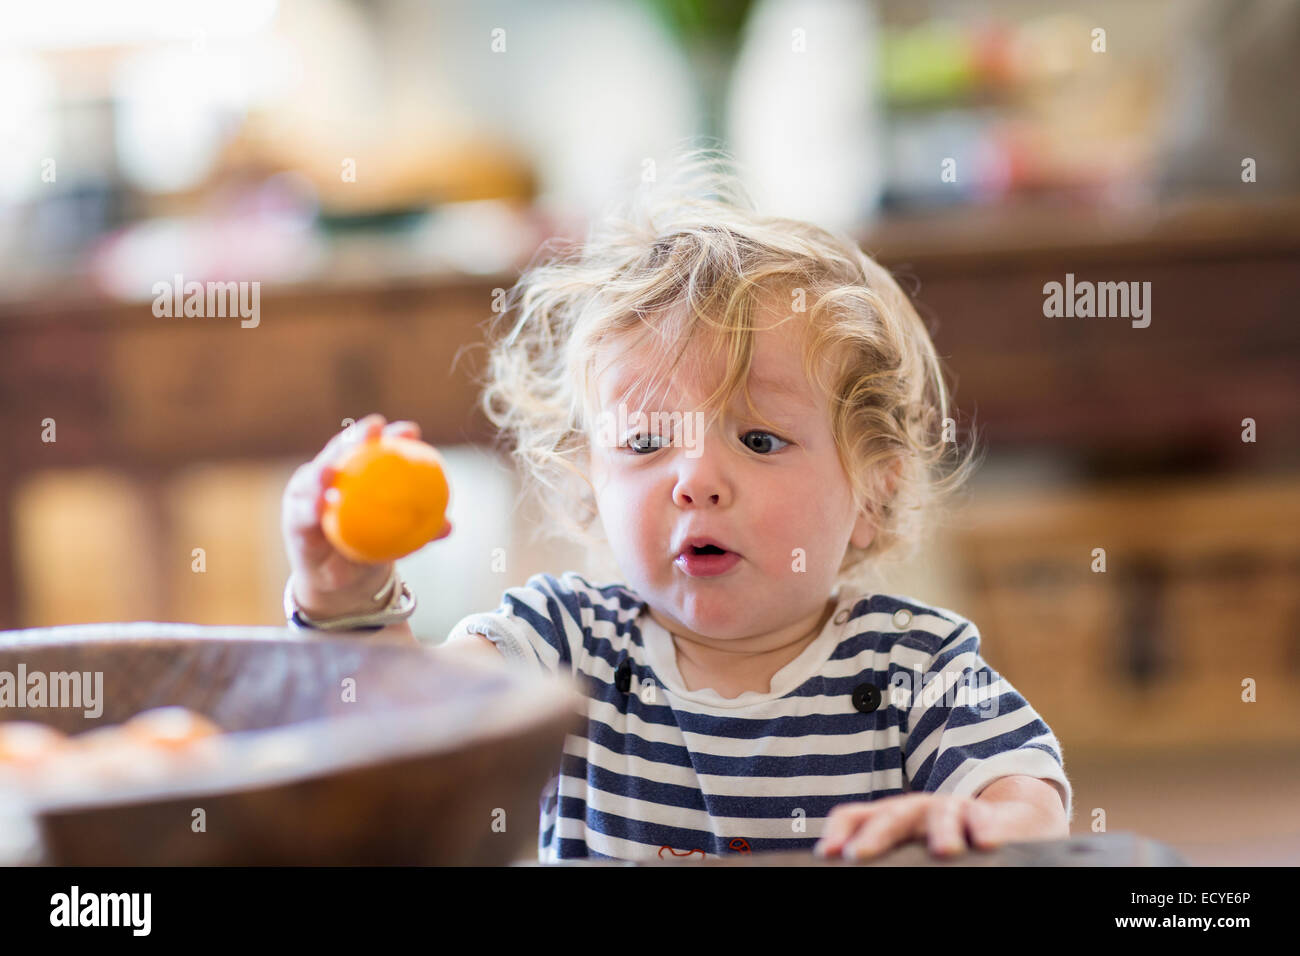 Surprised Caucasian baby boy examining fruit Stock Photo